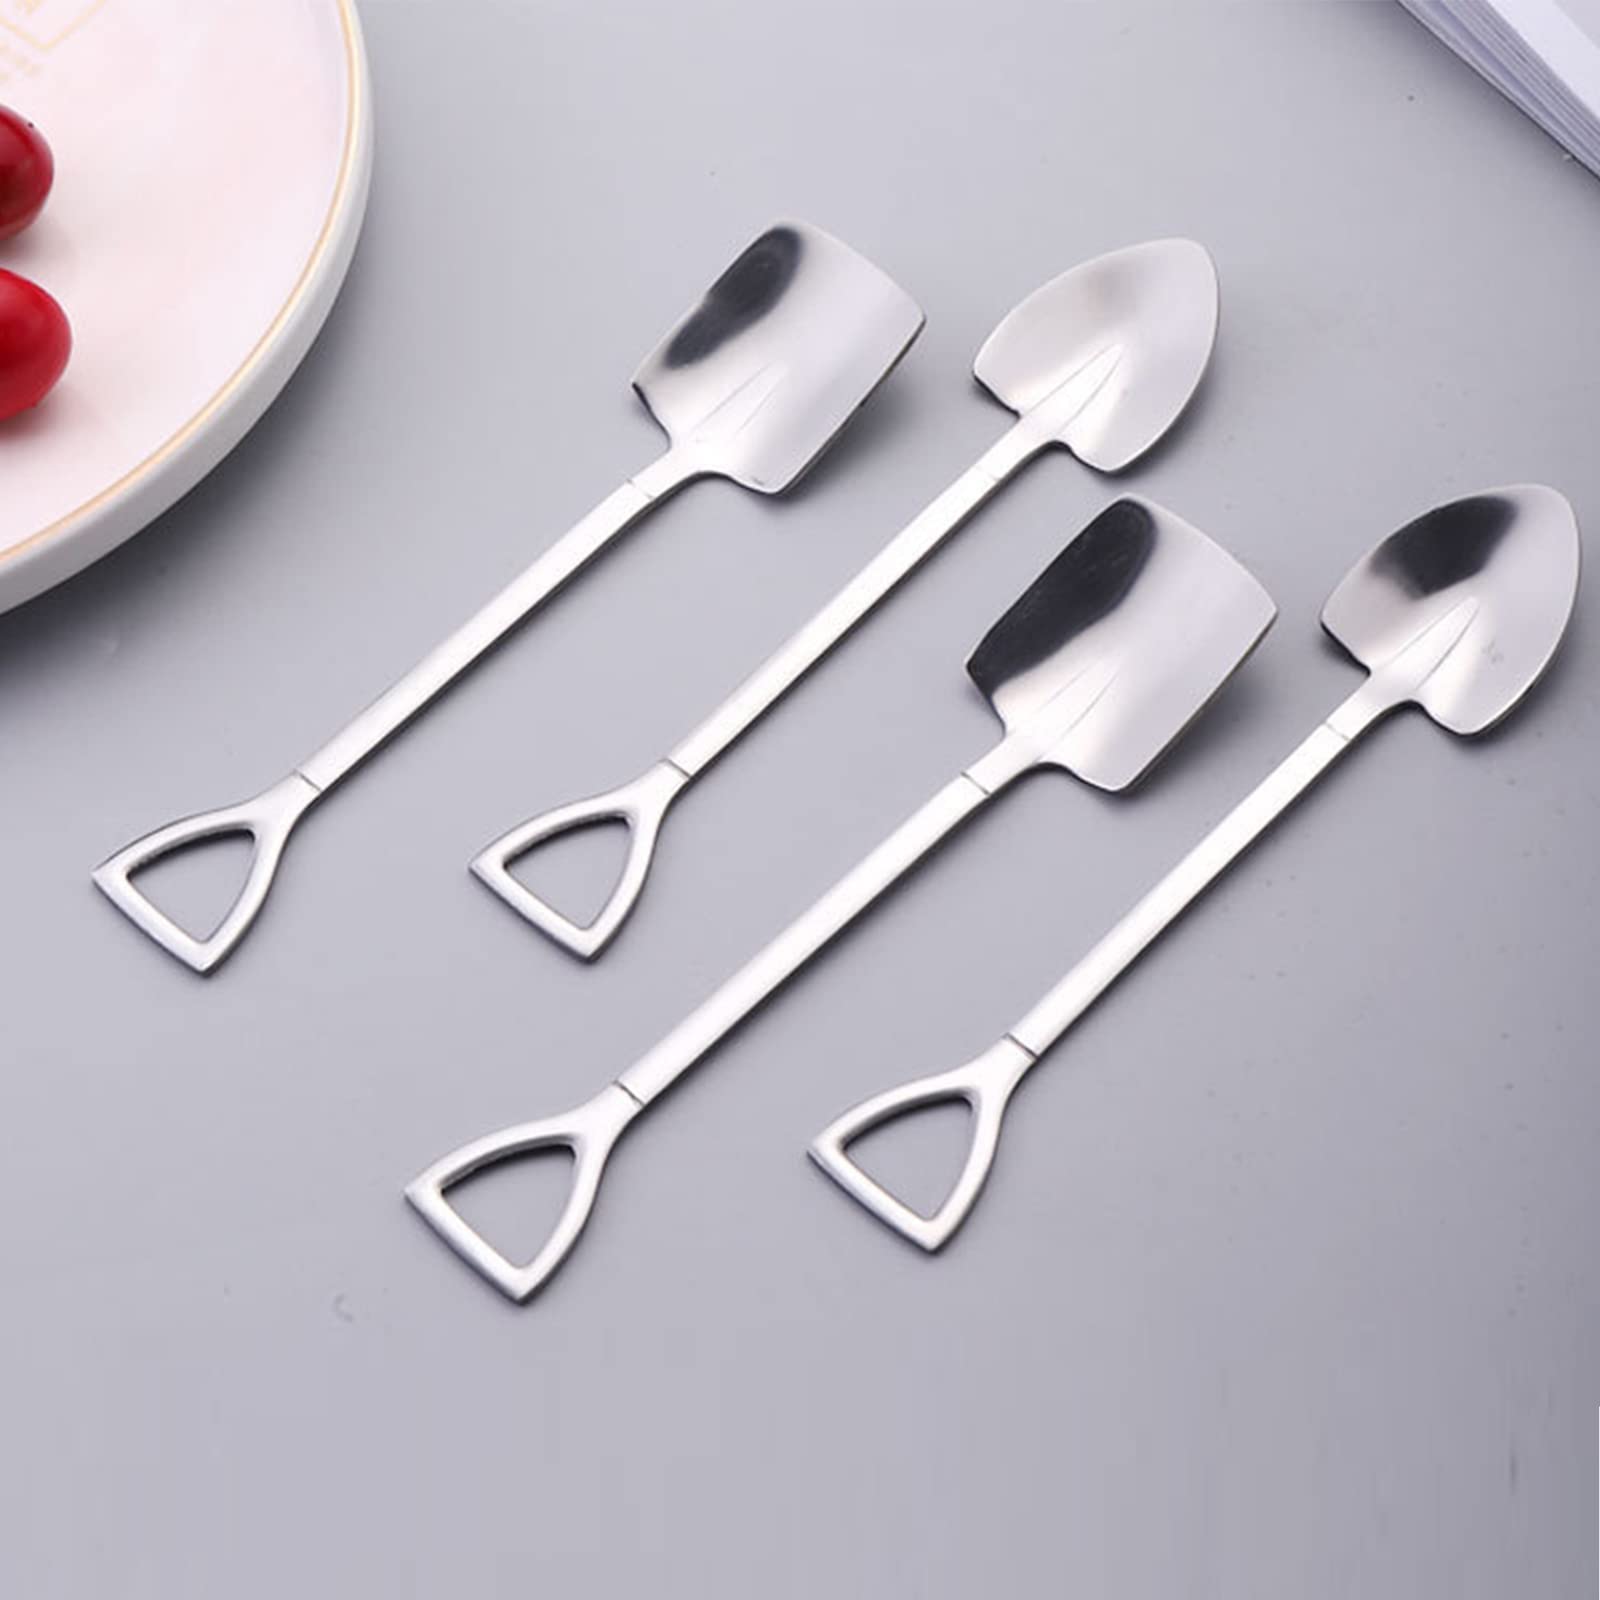 TAORANJU Shovel Spoons for Desserts, 4 Pcs Stainless Steel Ice Cream Spoons Espresso Spoons Coffee Spoons Reusable Tiny Pointed Spoons for Dessert Tea Sugar Cake Yogurt